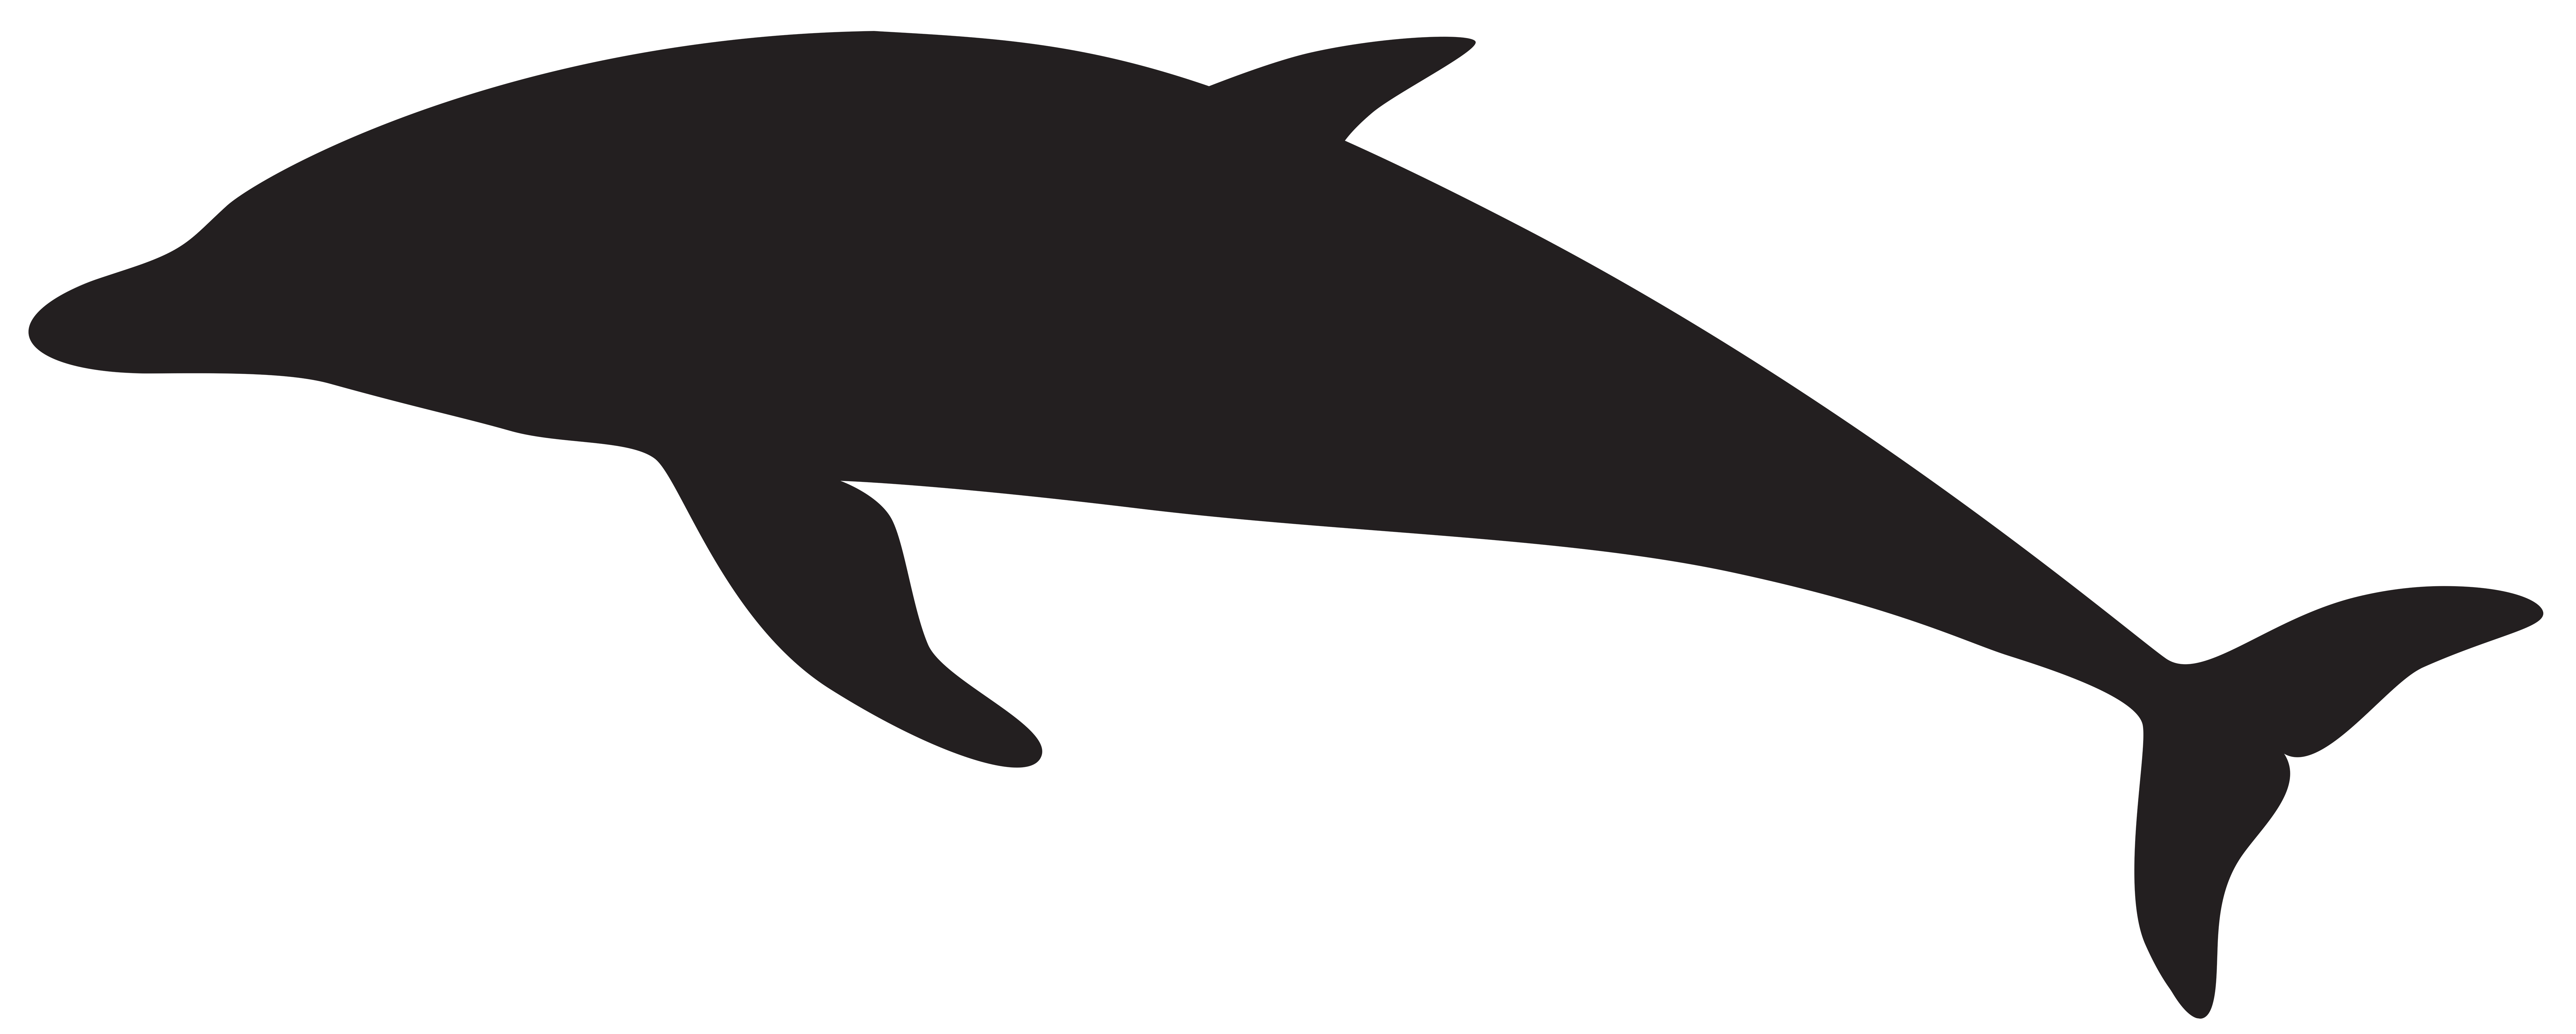 clipart dolphin porpoise